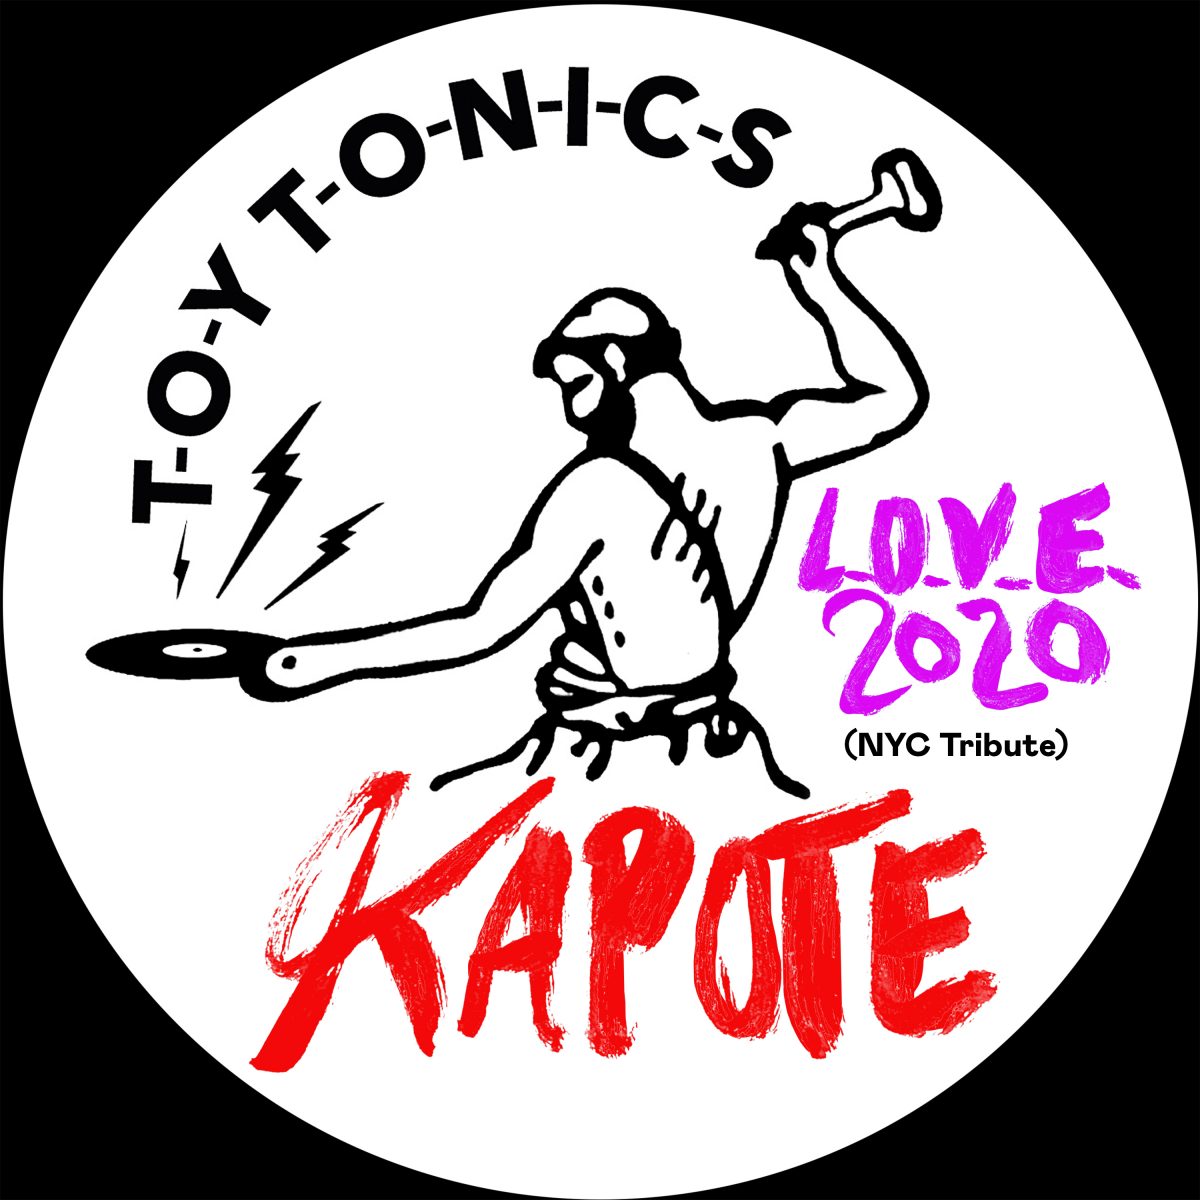 Kapote – L.O.V.E. 2020 (NYC Tribute) [TOYT090S]